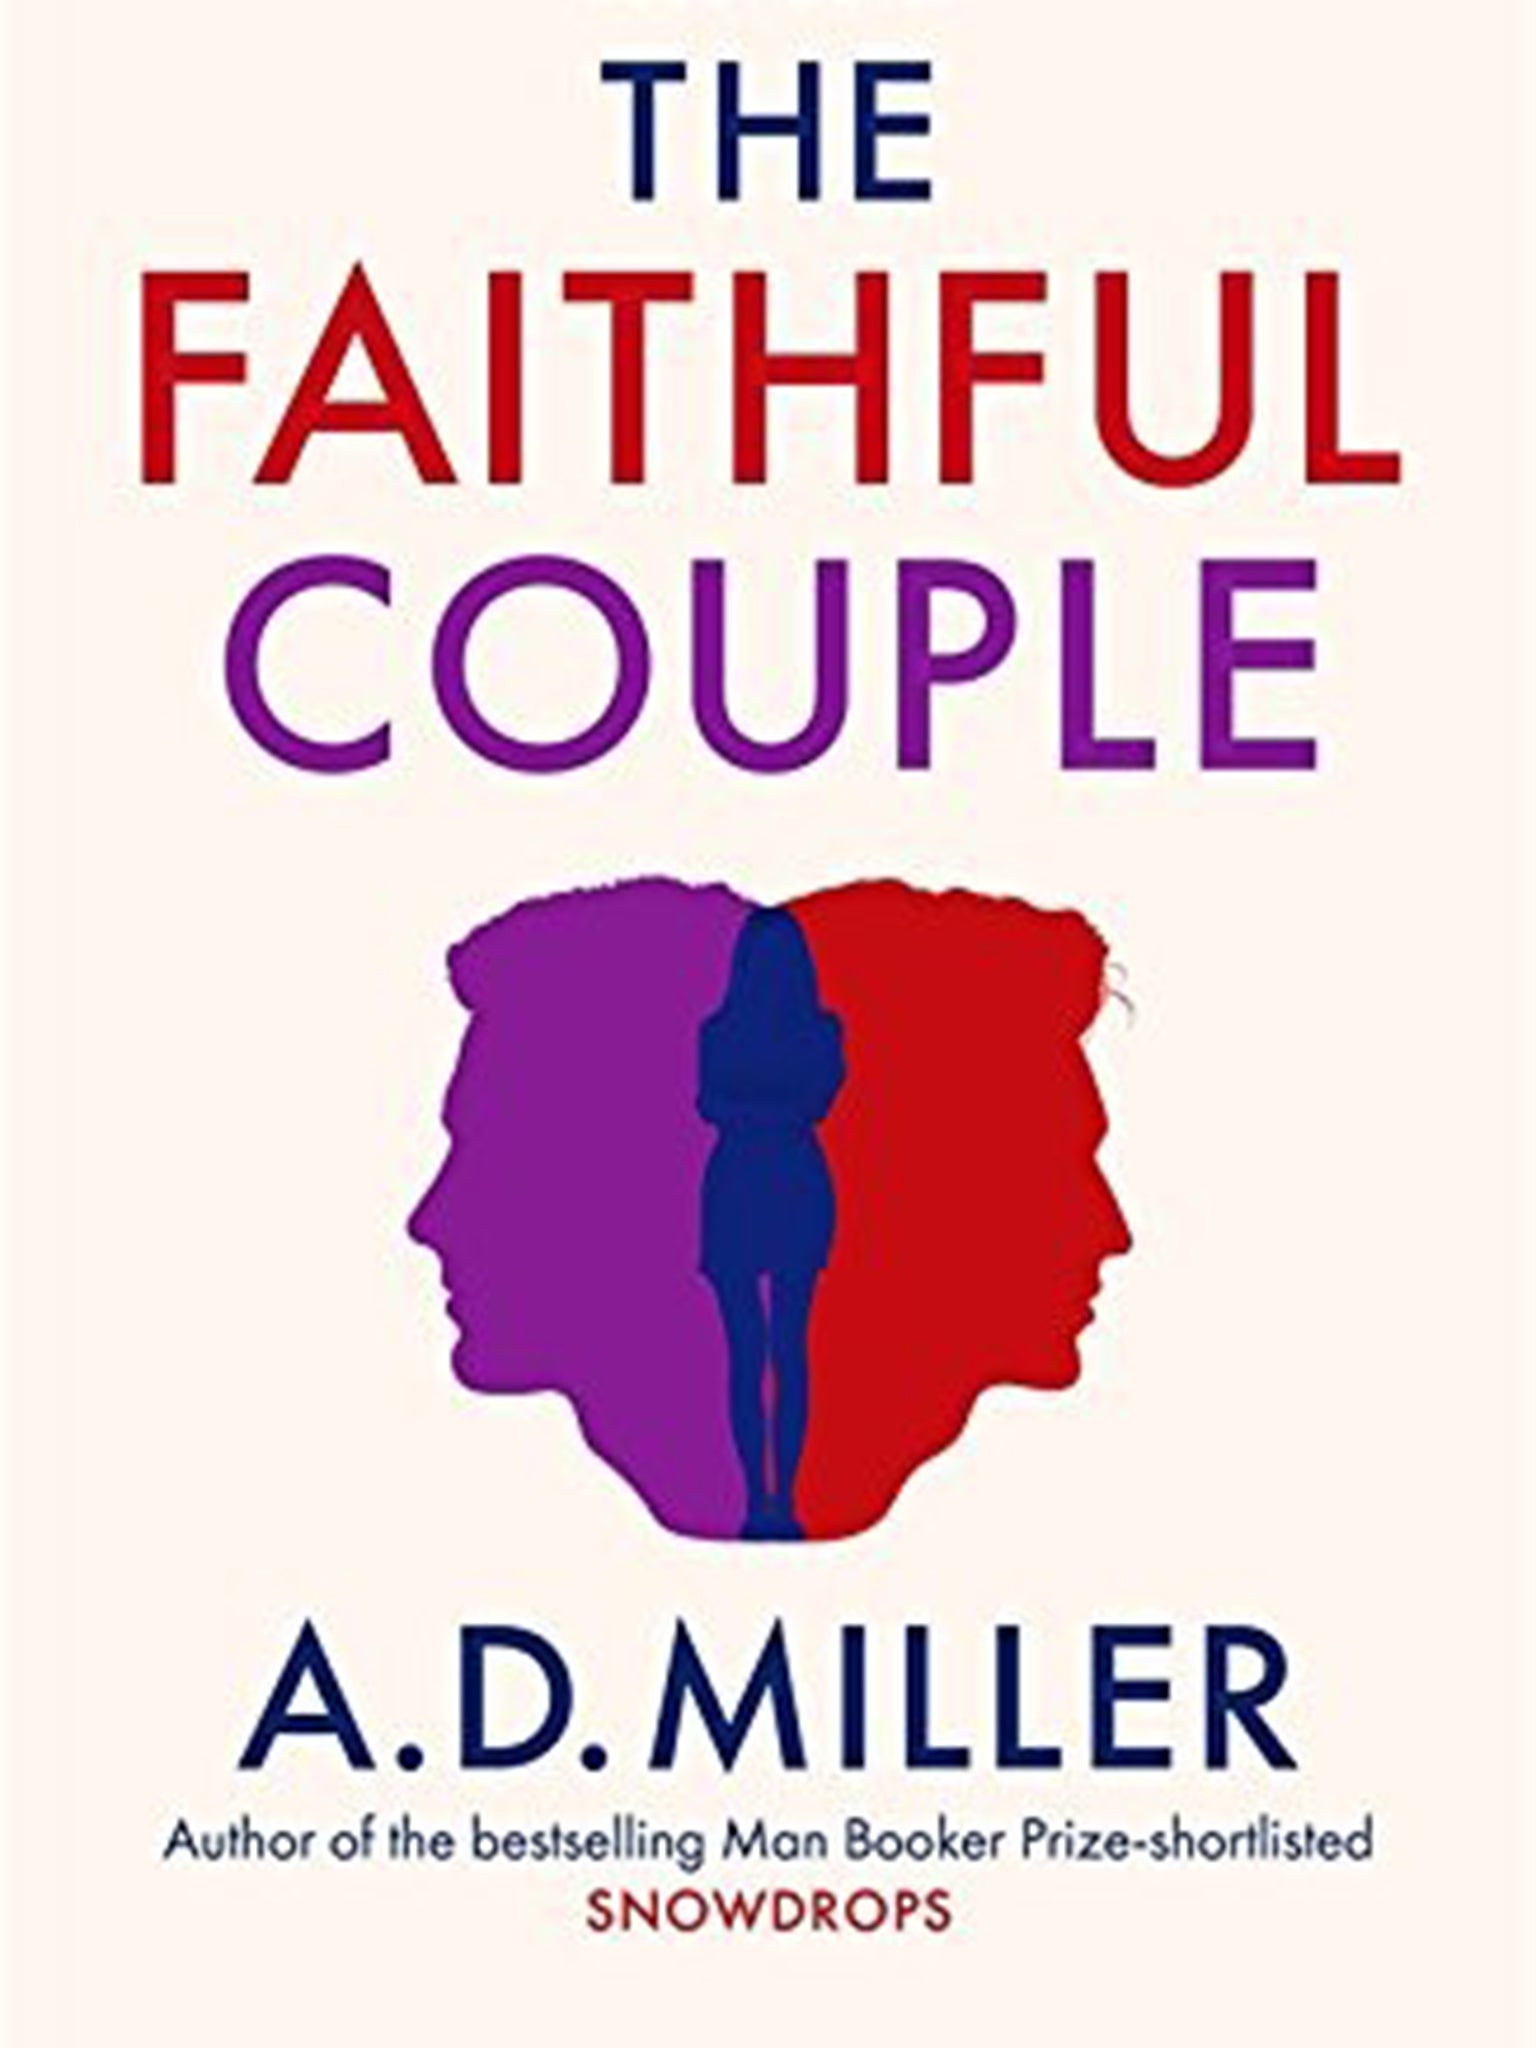 The Faithful Couple by AD Miller